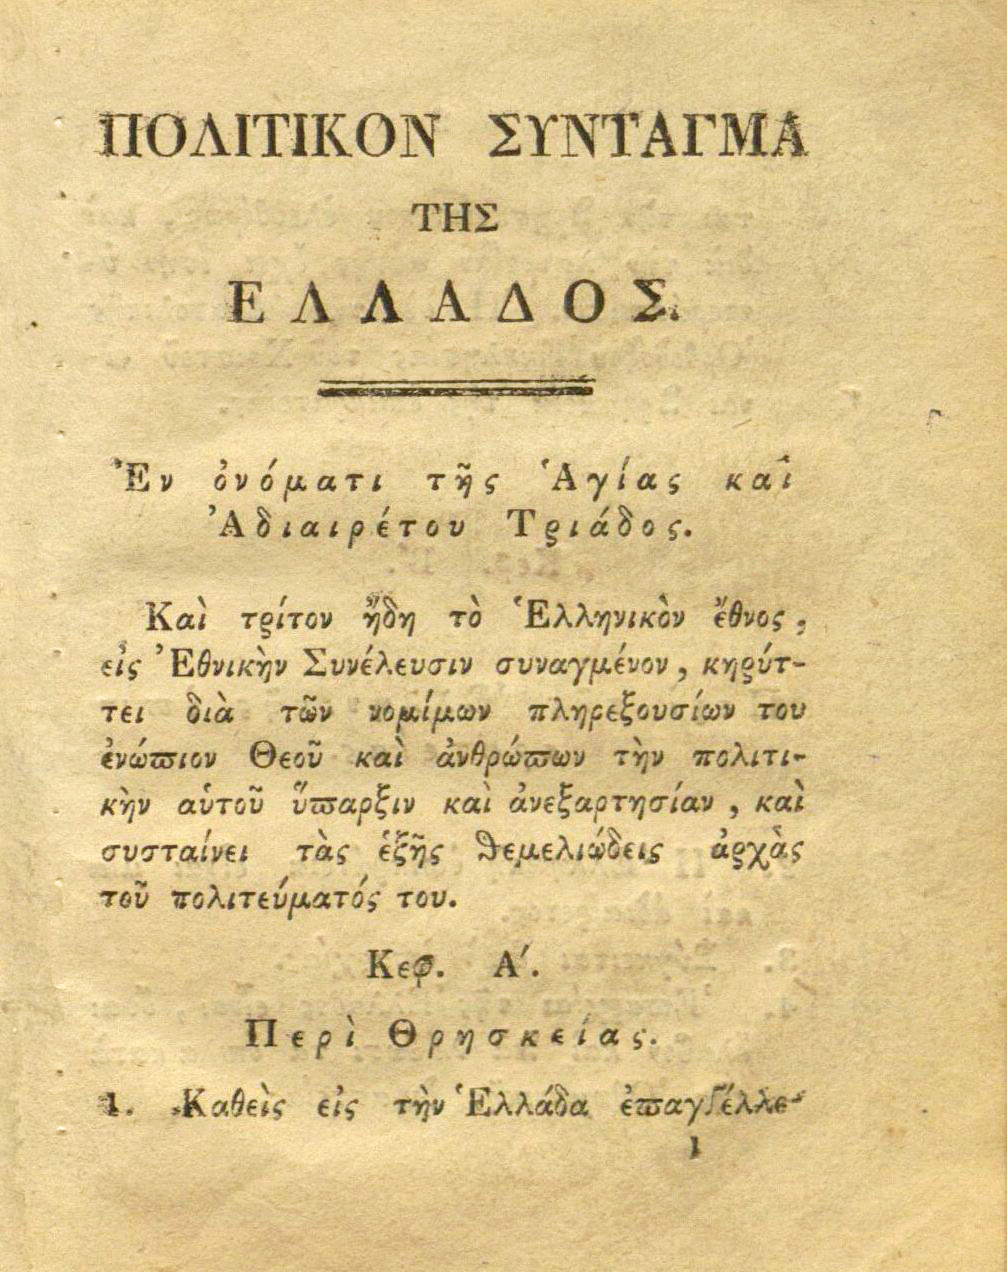 Tο Πολιτικόν Σύνταγμα της Ελλάδος ψηφίστηκε την 1η Μαΐου 1827 στην τρίτη και τελική σύνοδο της Γ Εθνοσυνέλευσης στην Τροιζήνα (19 Μαρτίου 5 Μαΐου 1827), υπό την προεδρία του Γεωργίου Σισίνη.